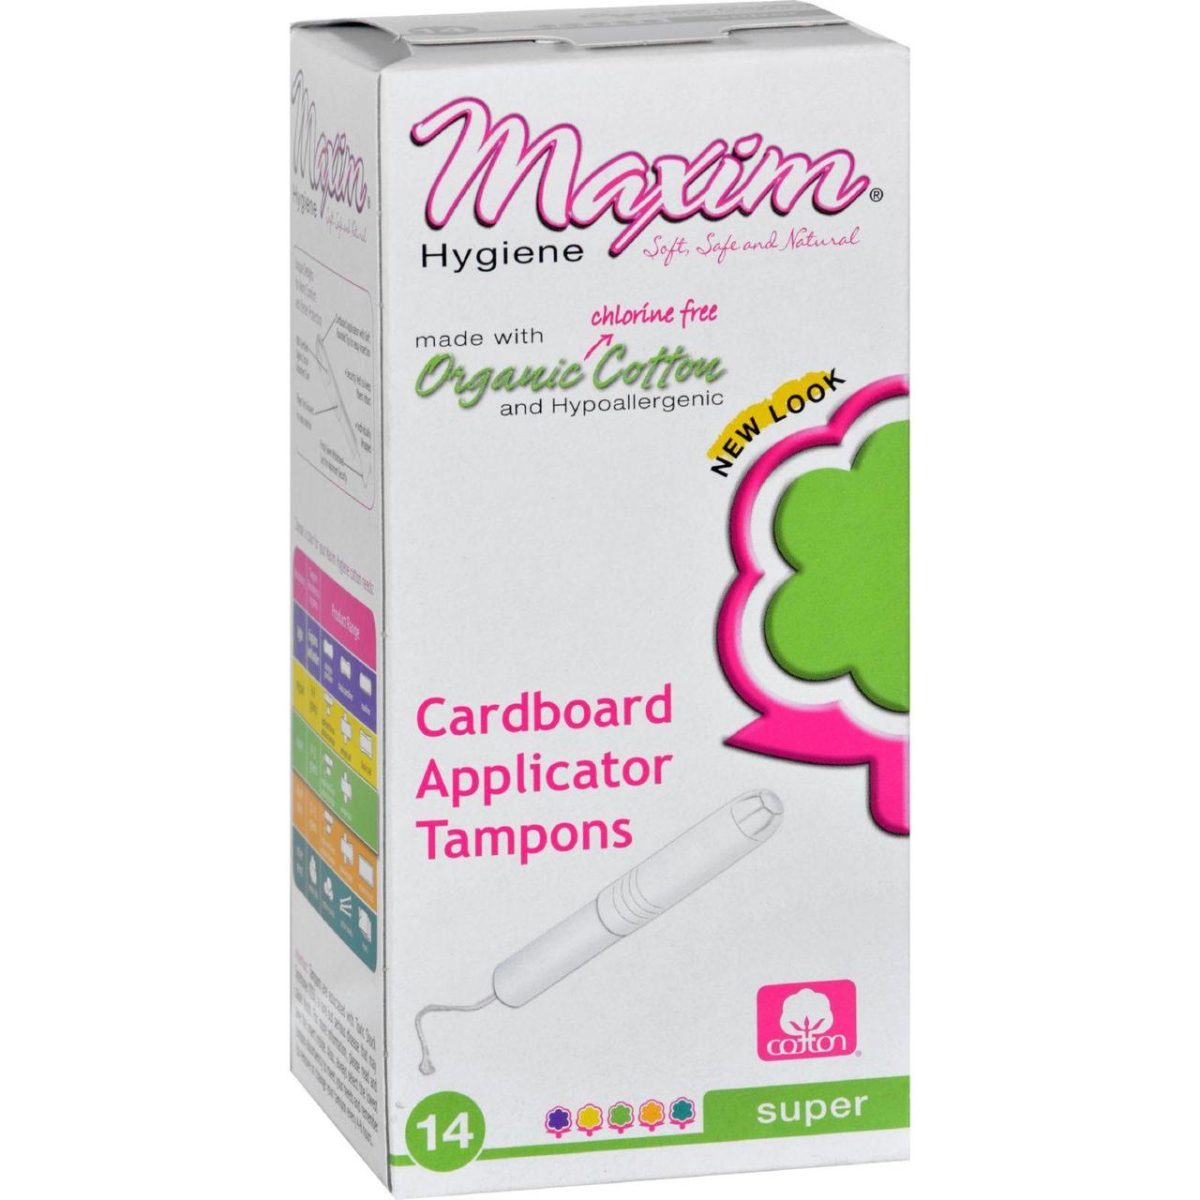 Hg1724145 Tampons Organic Cotton Cardboard Applicator, Super - 14 Count